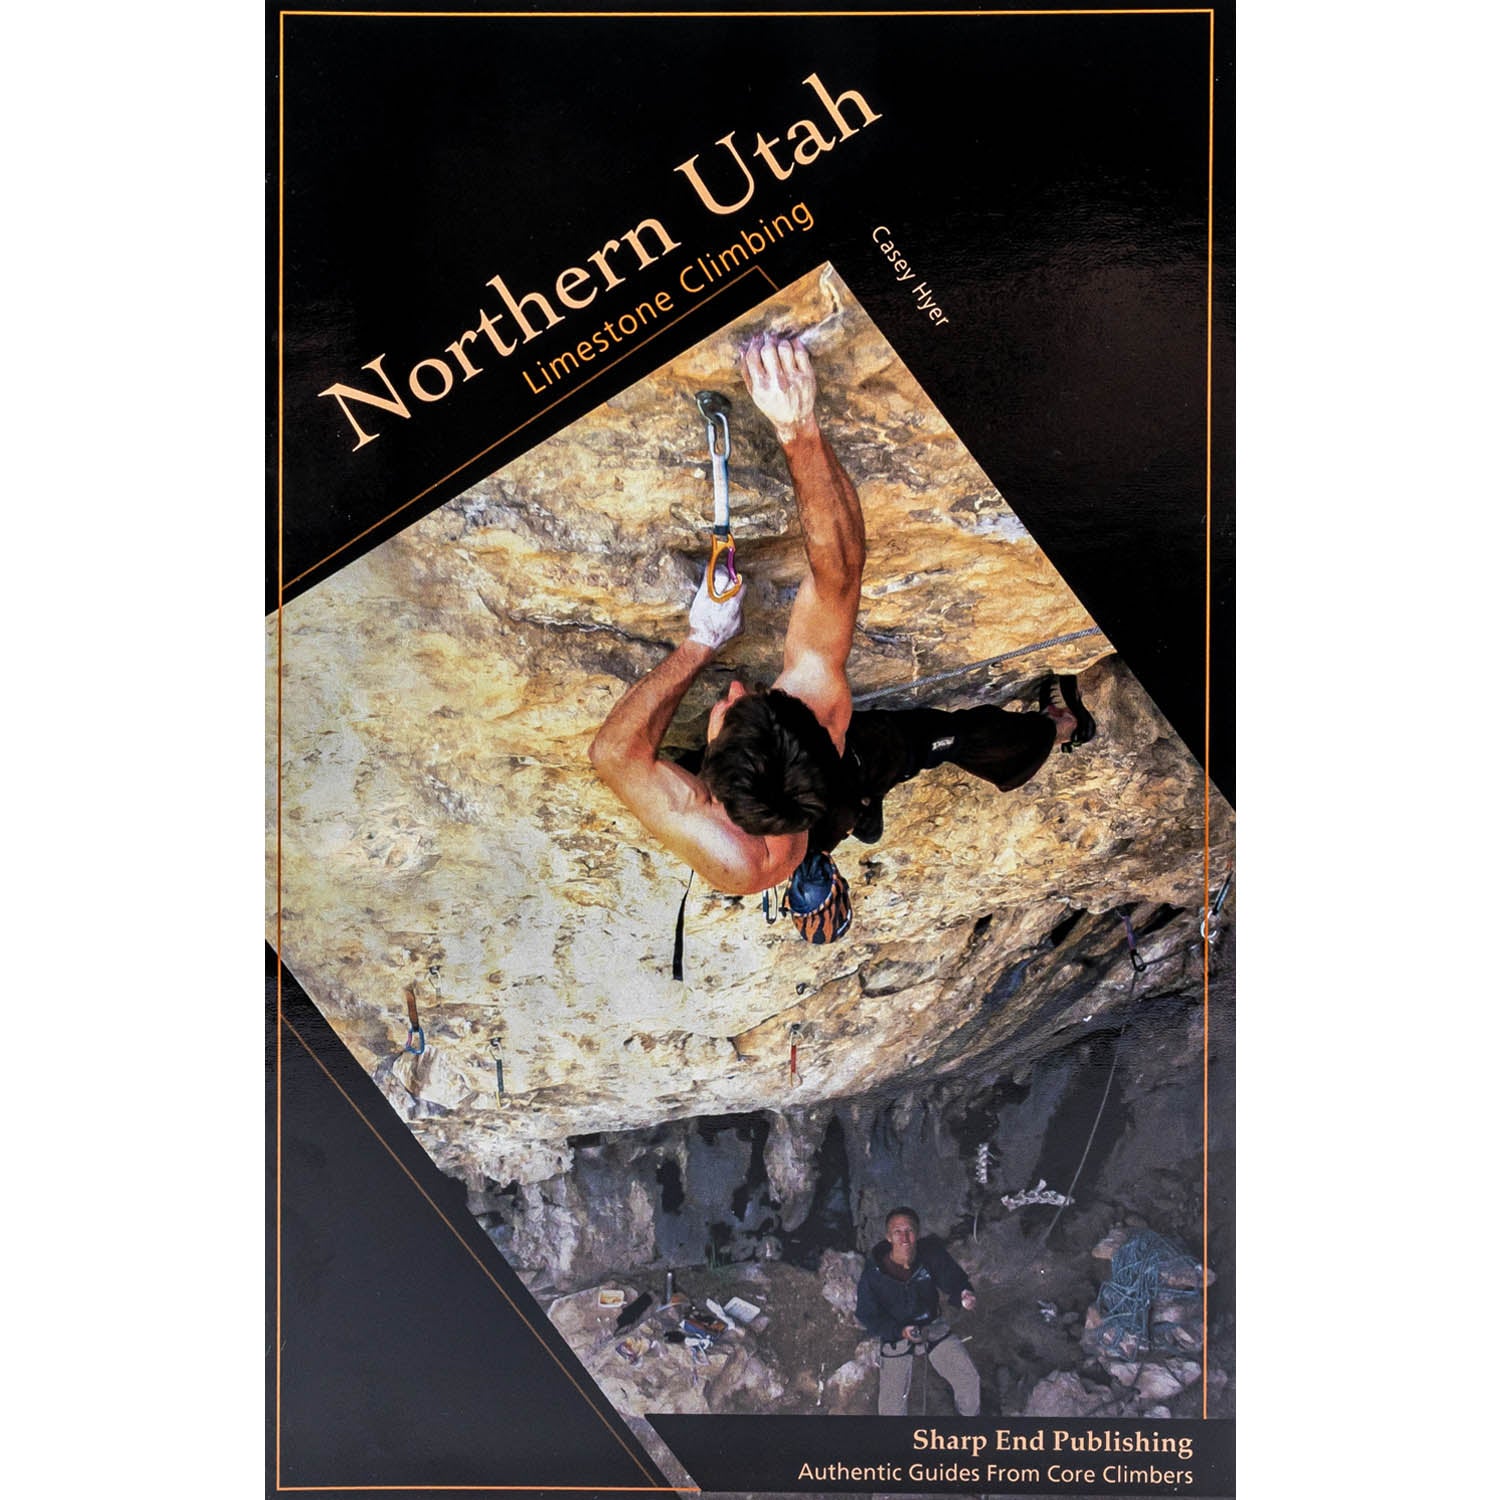 Northern Utah: Limestone Climbing